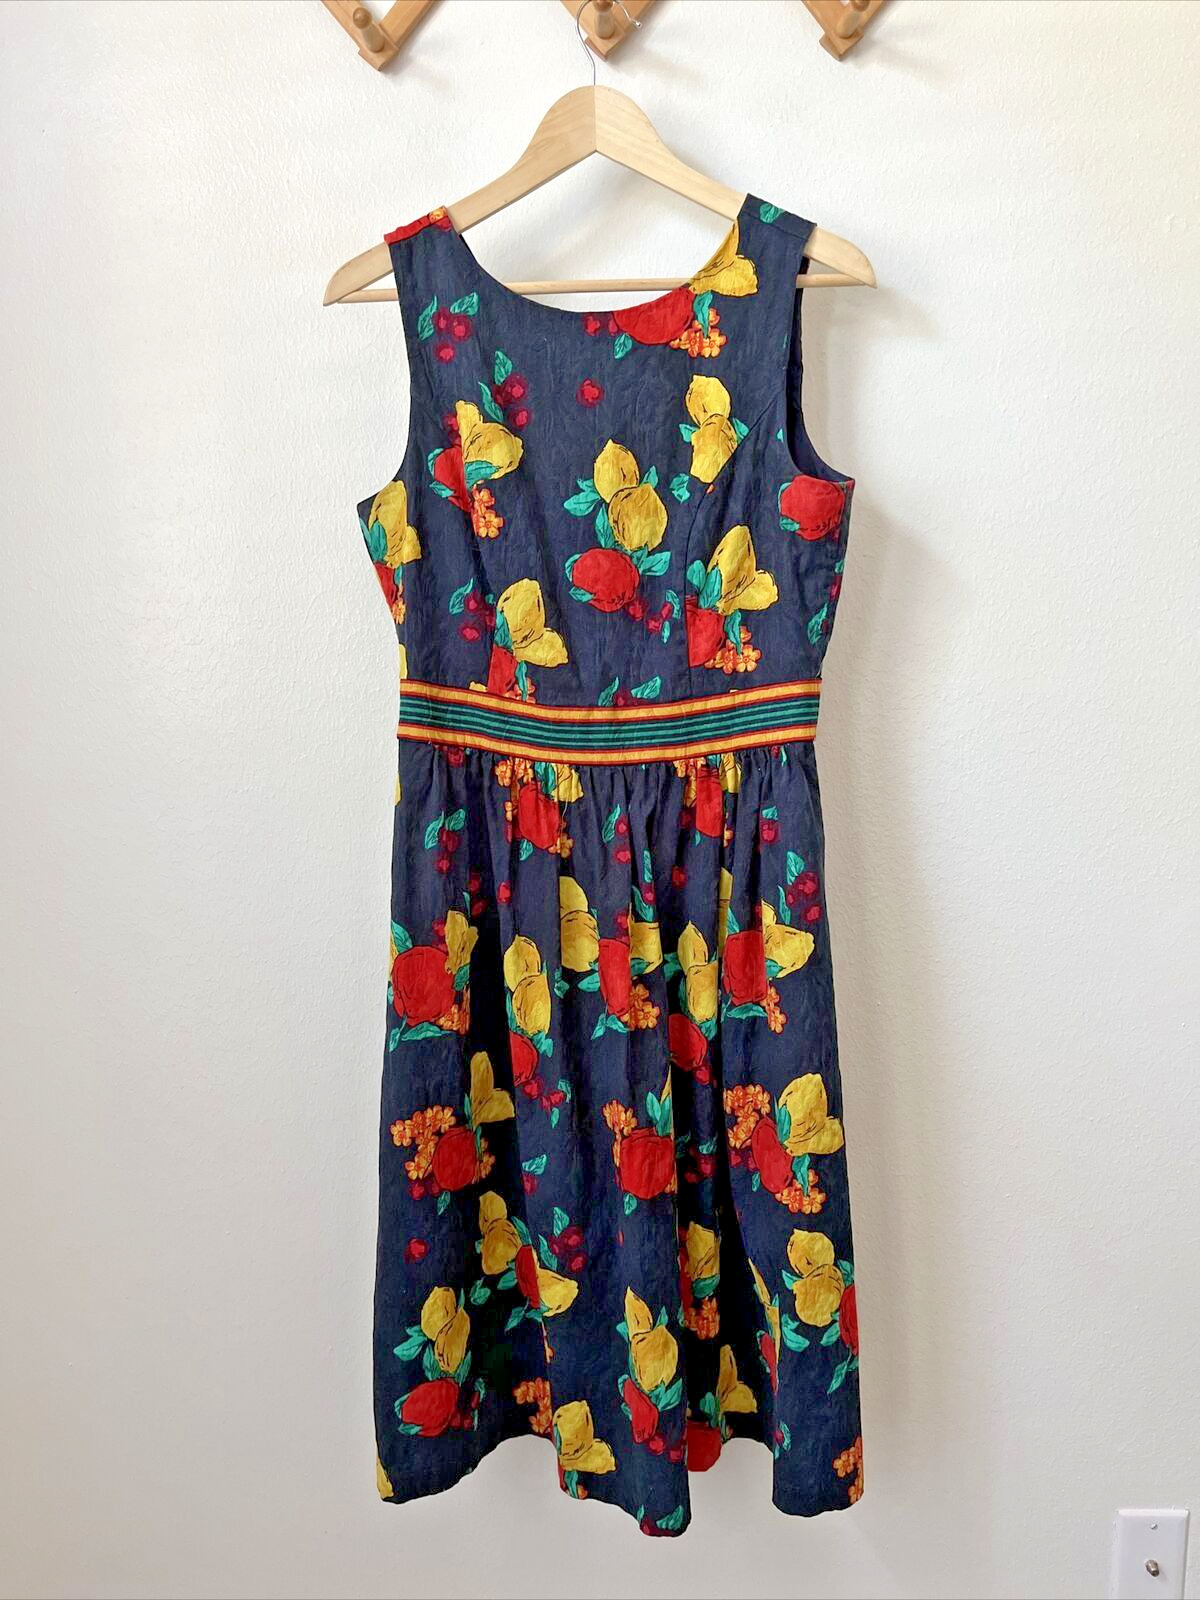 1950s Style Rockabilly Retro Fruit Print Dress Size 10 Eva Mendes